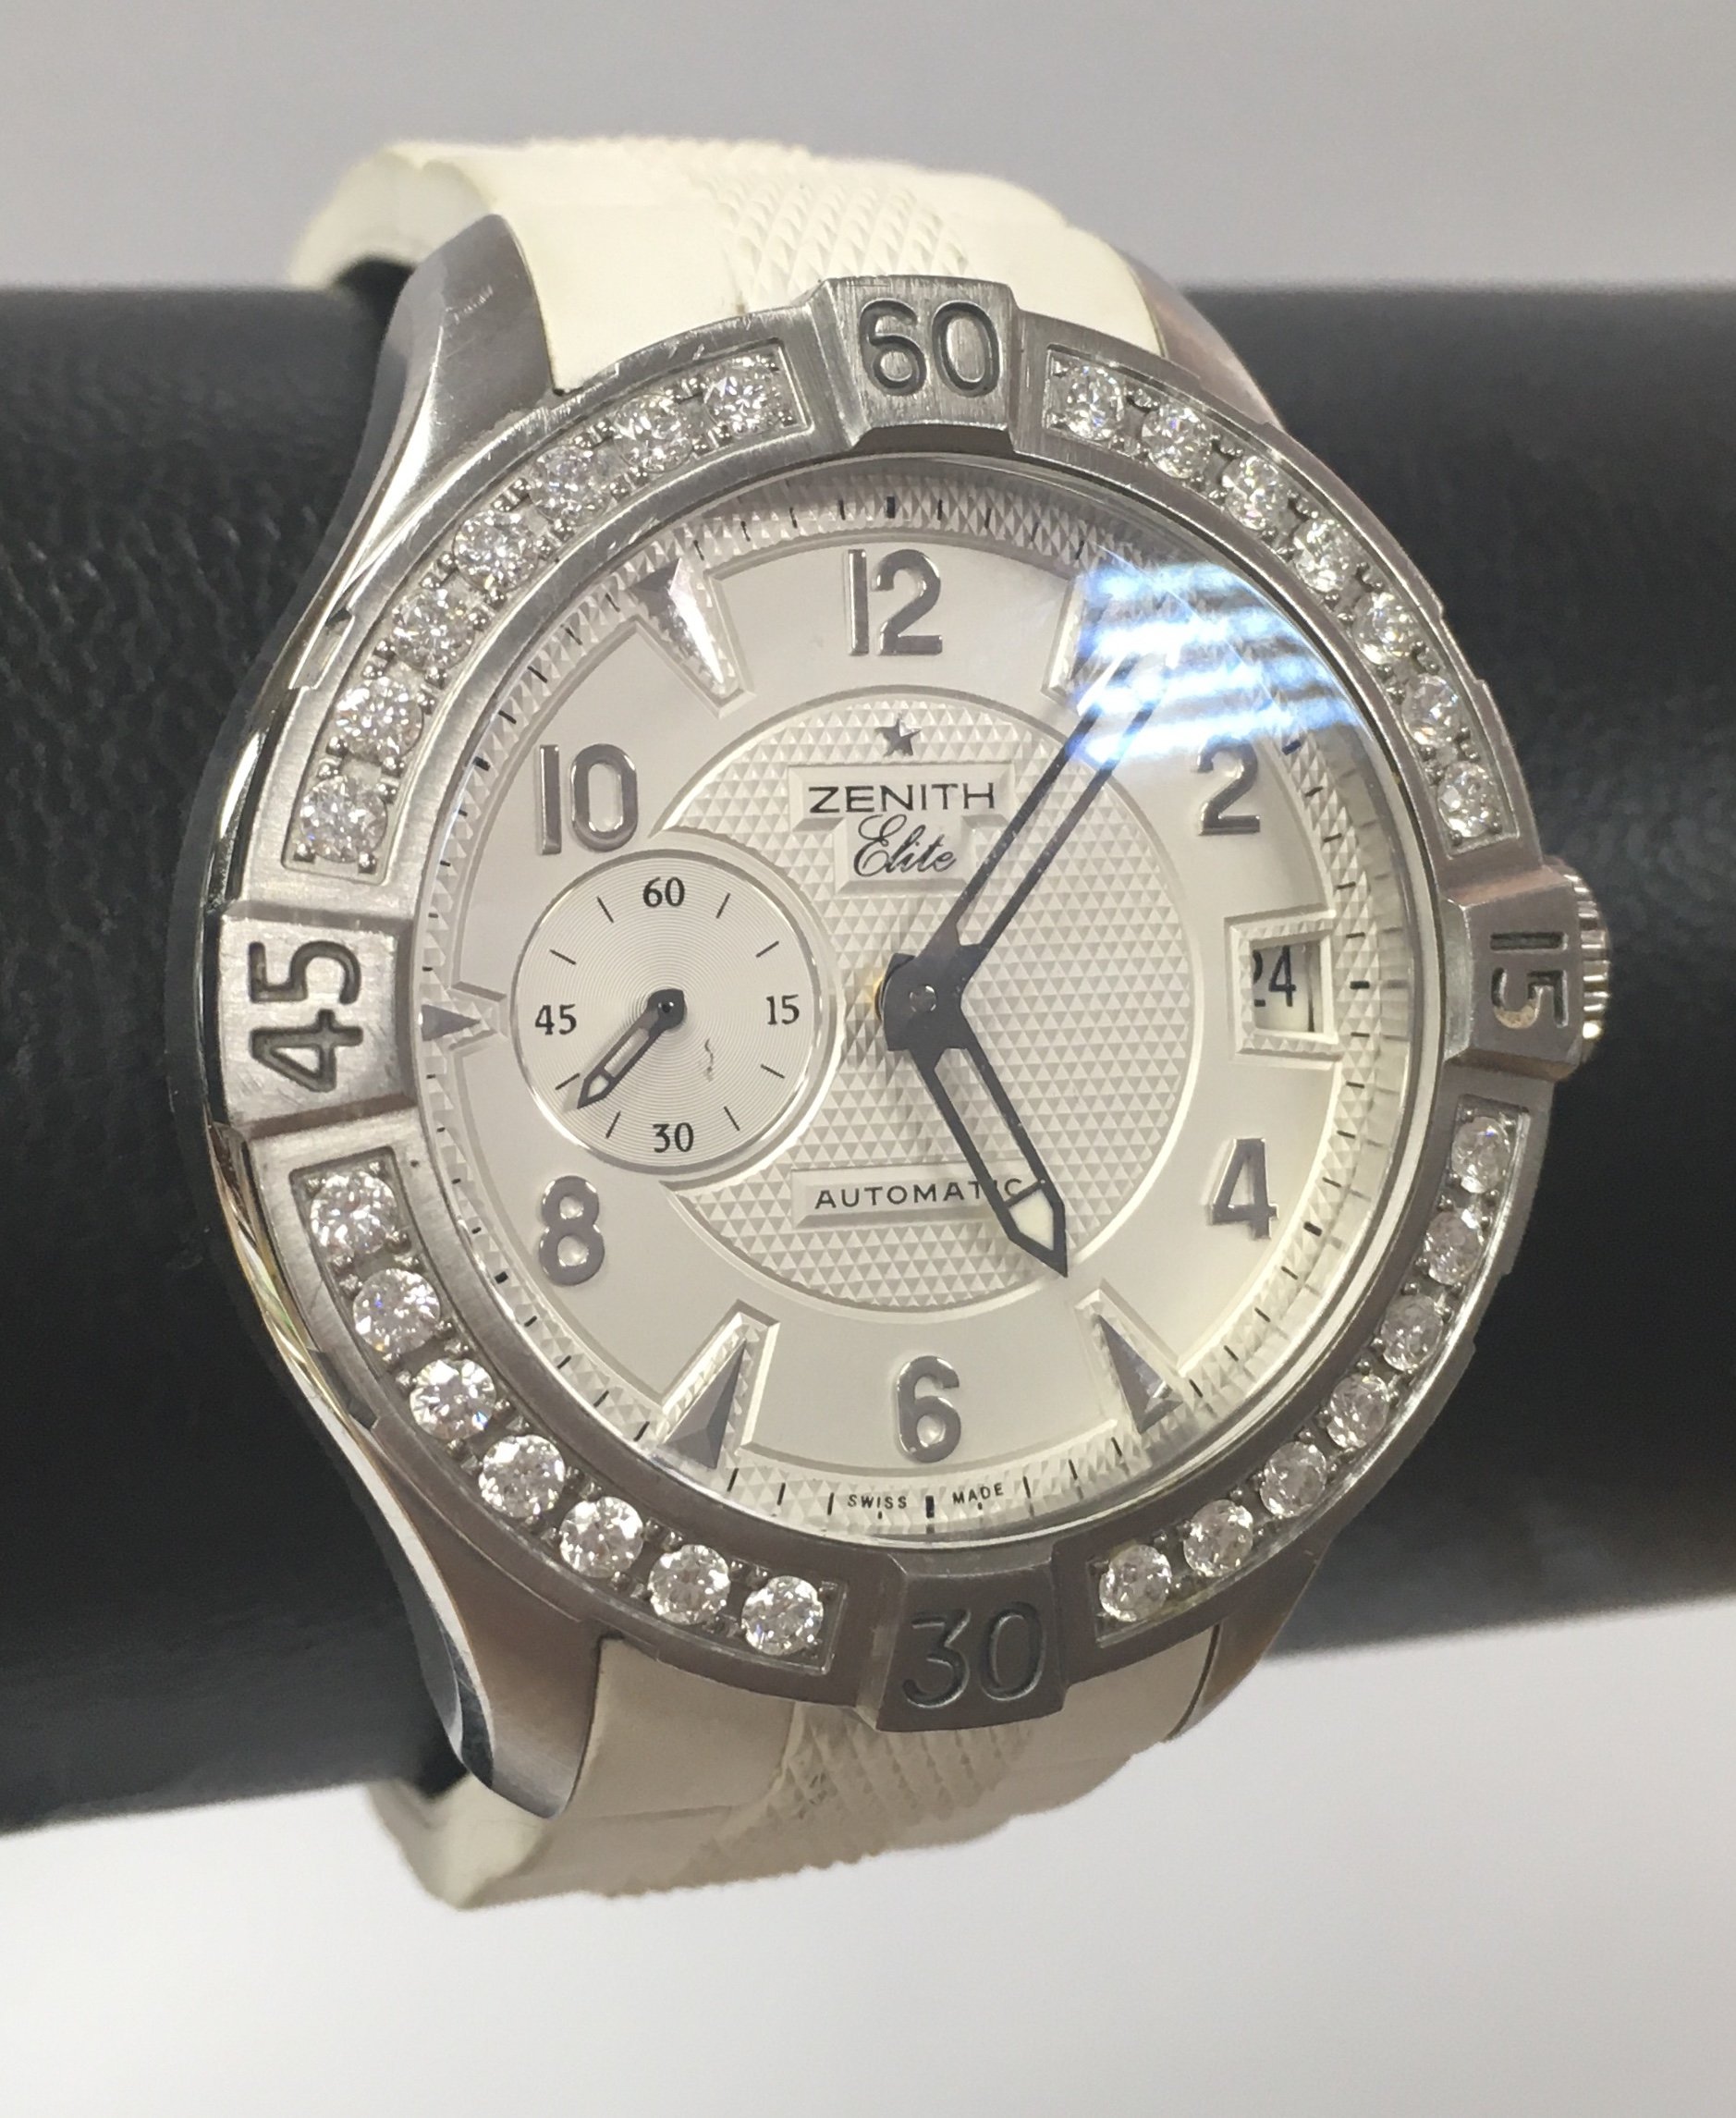 A Zenith ladies Elite stainless steel automatic wristwatch watch with a diamond set bezel.